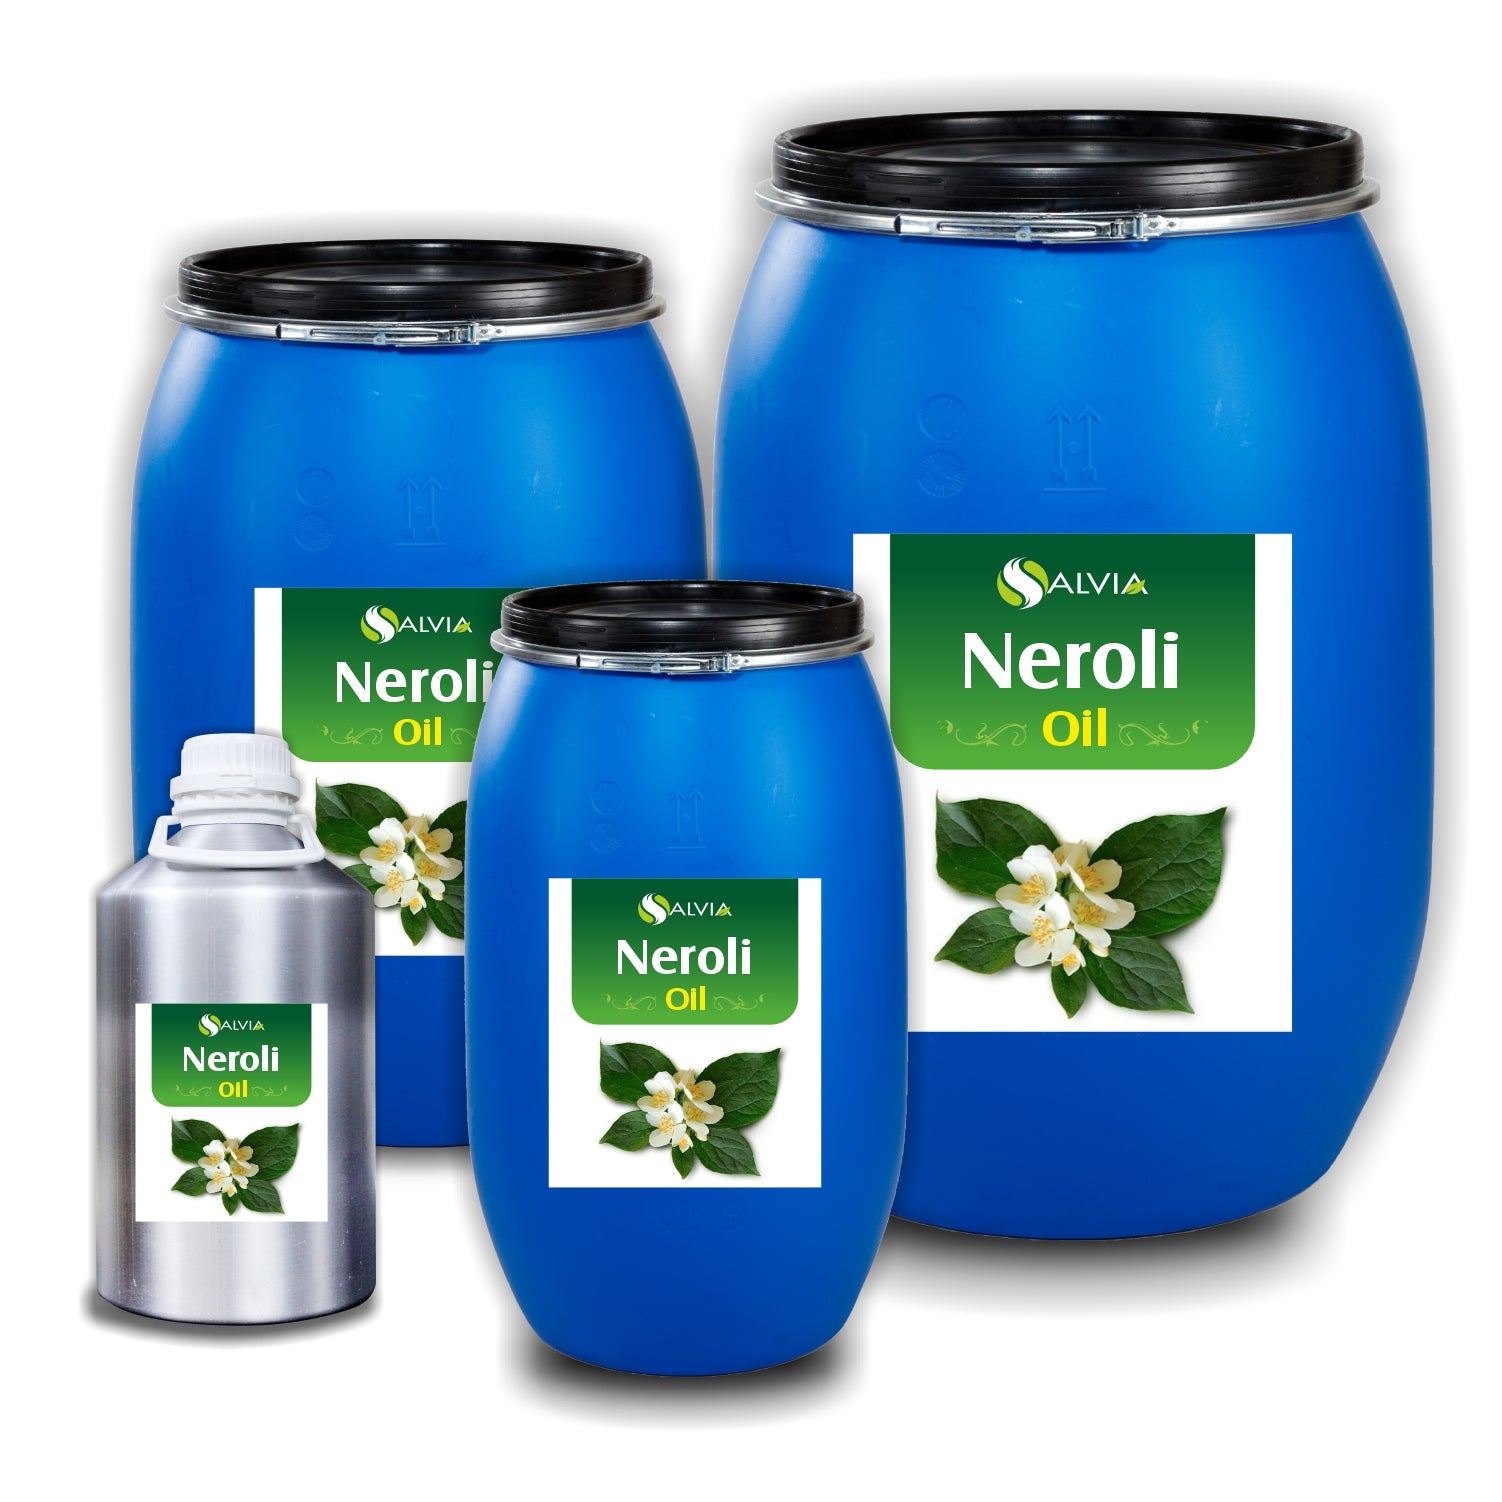 Organic Neroli Essential Oil - Get Natural Essential Oils